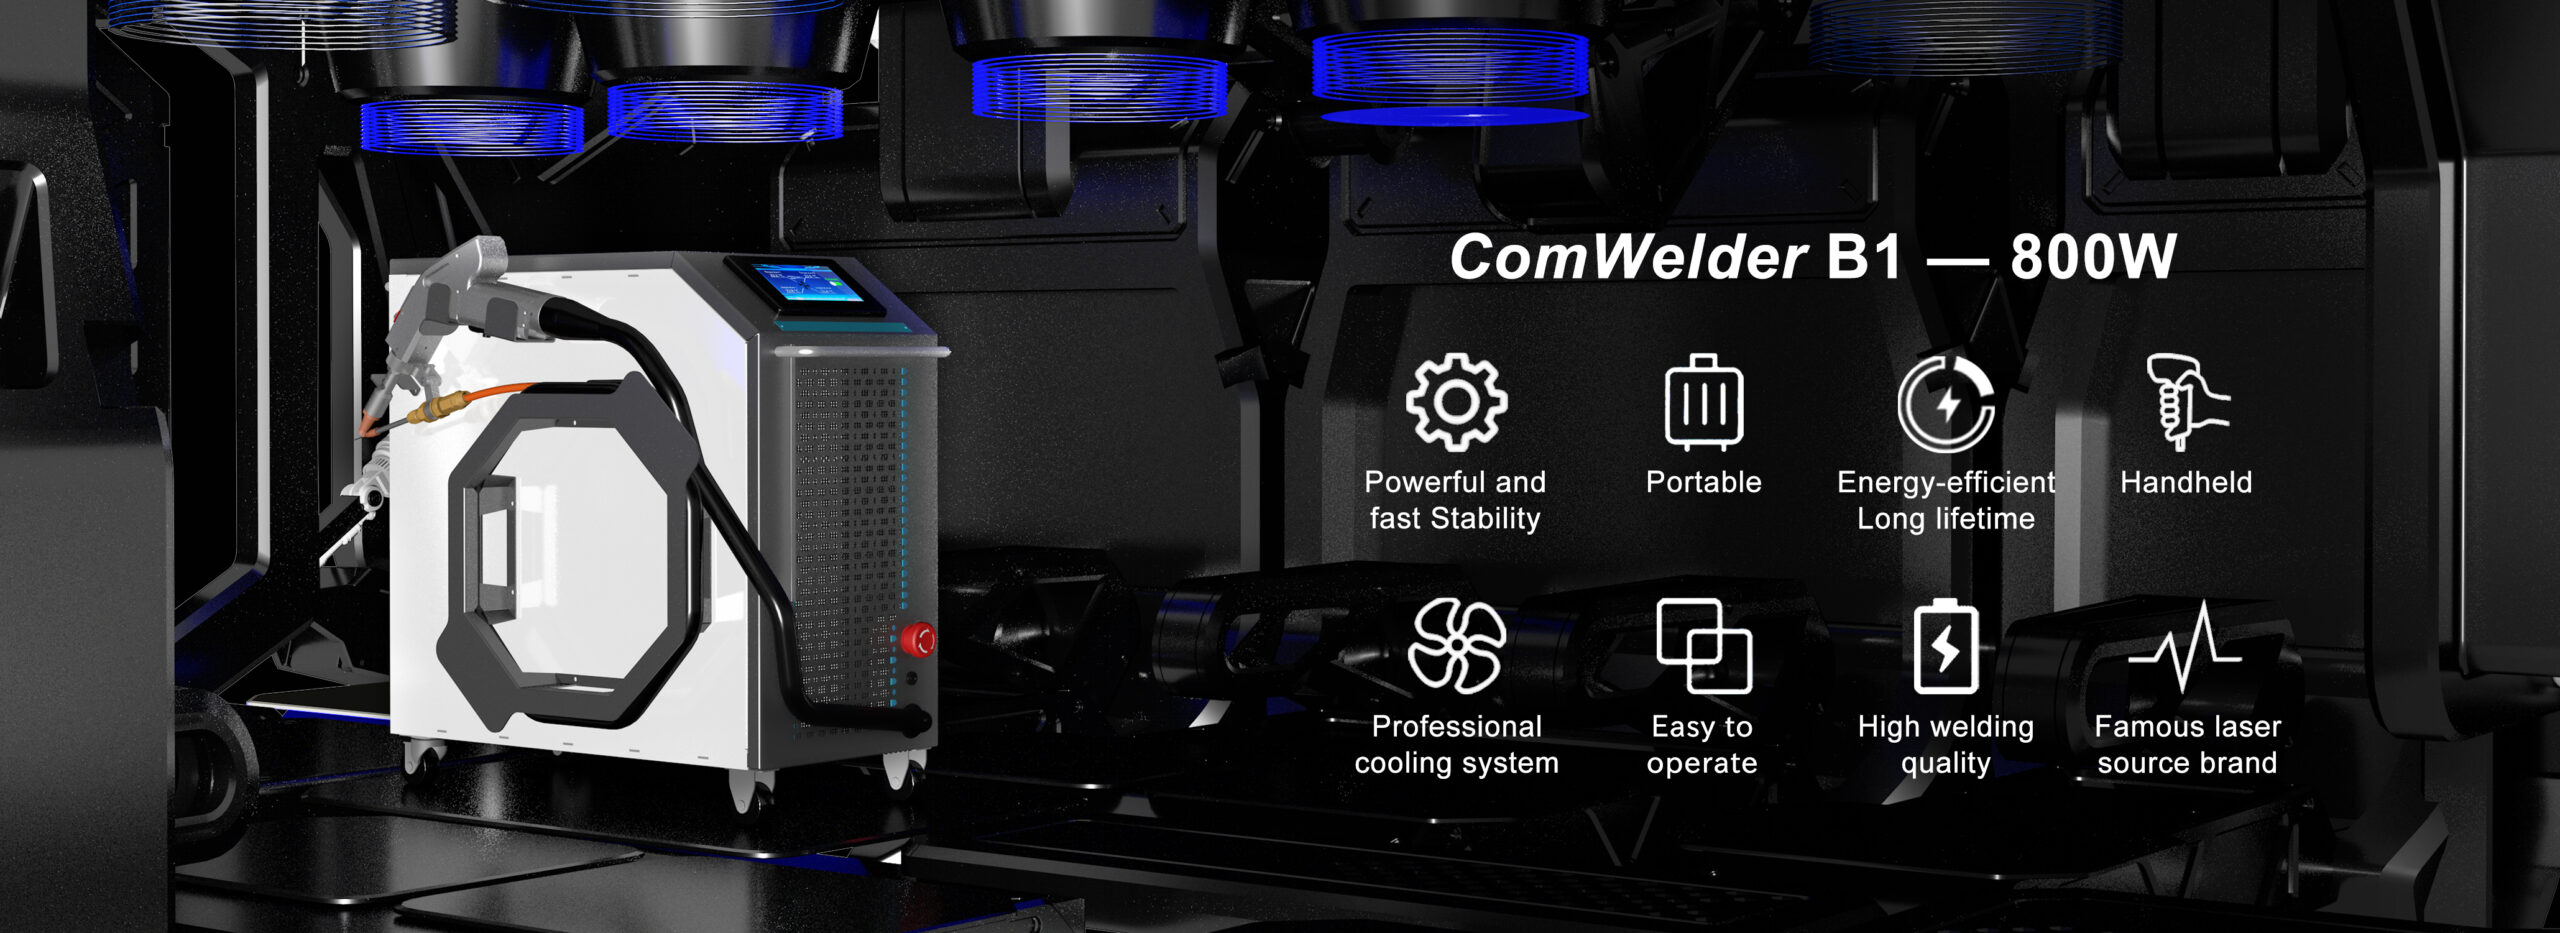 ComWelder B1 800W Air cooling handheld Laser Welding Machine scaled